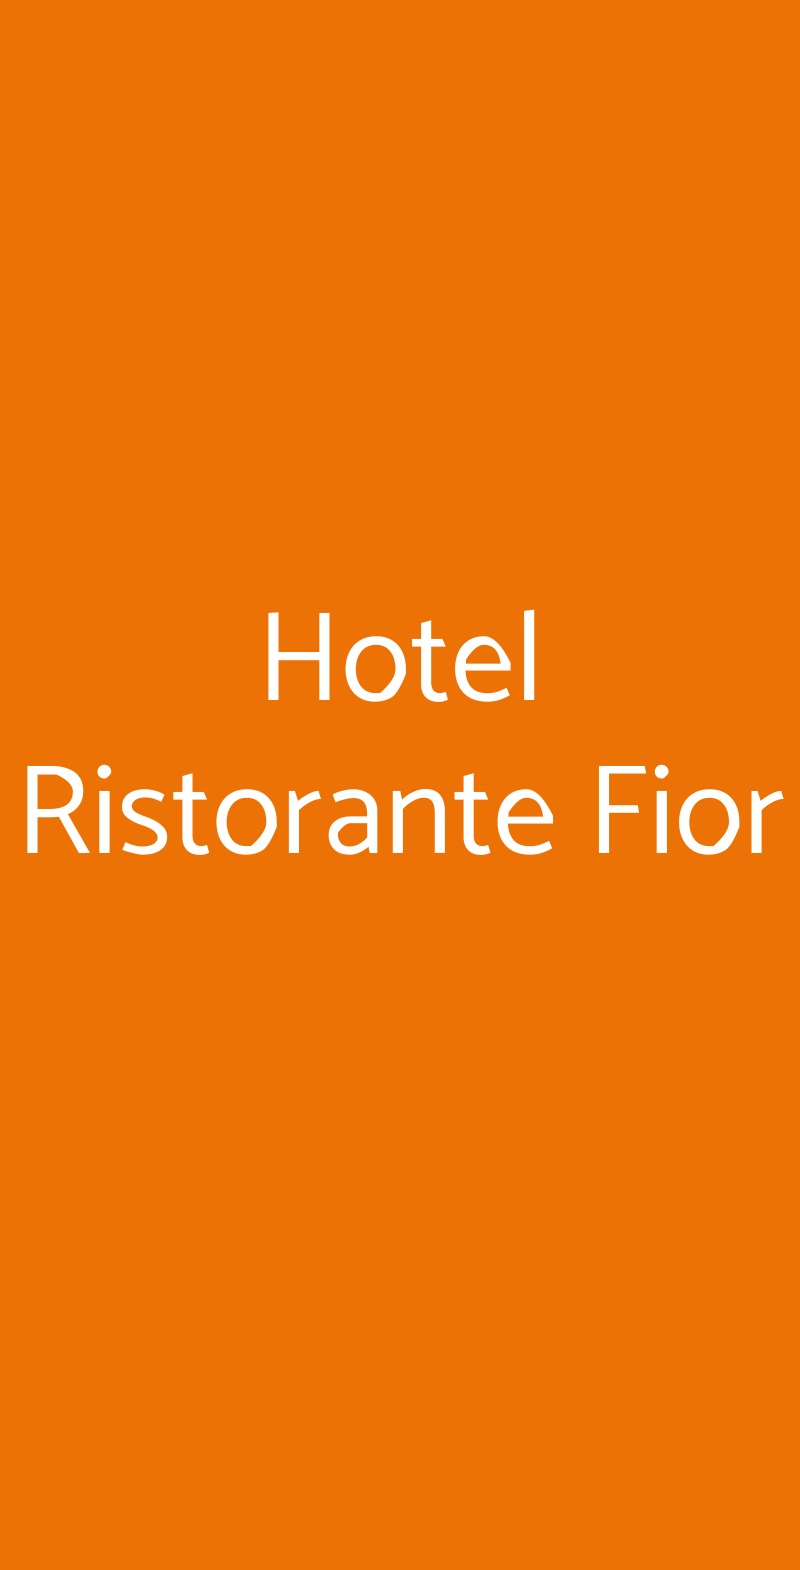 Hotel Ristorante Fior Castelfranco Veneto menù 1 pagina